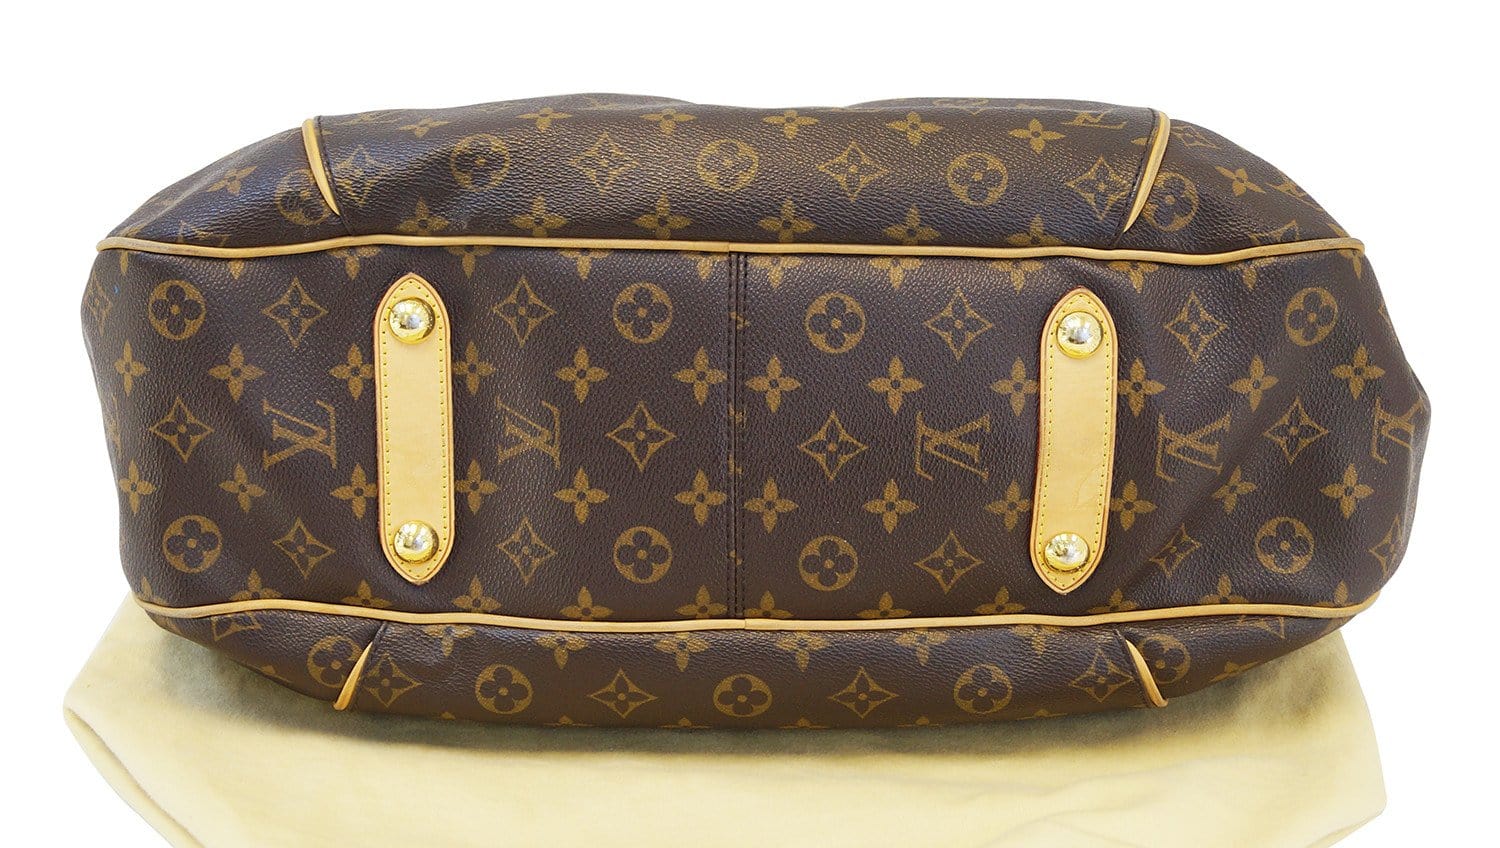 Louis Vuitton Galleria GM Monogram Large Shoulder Handbag